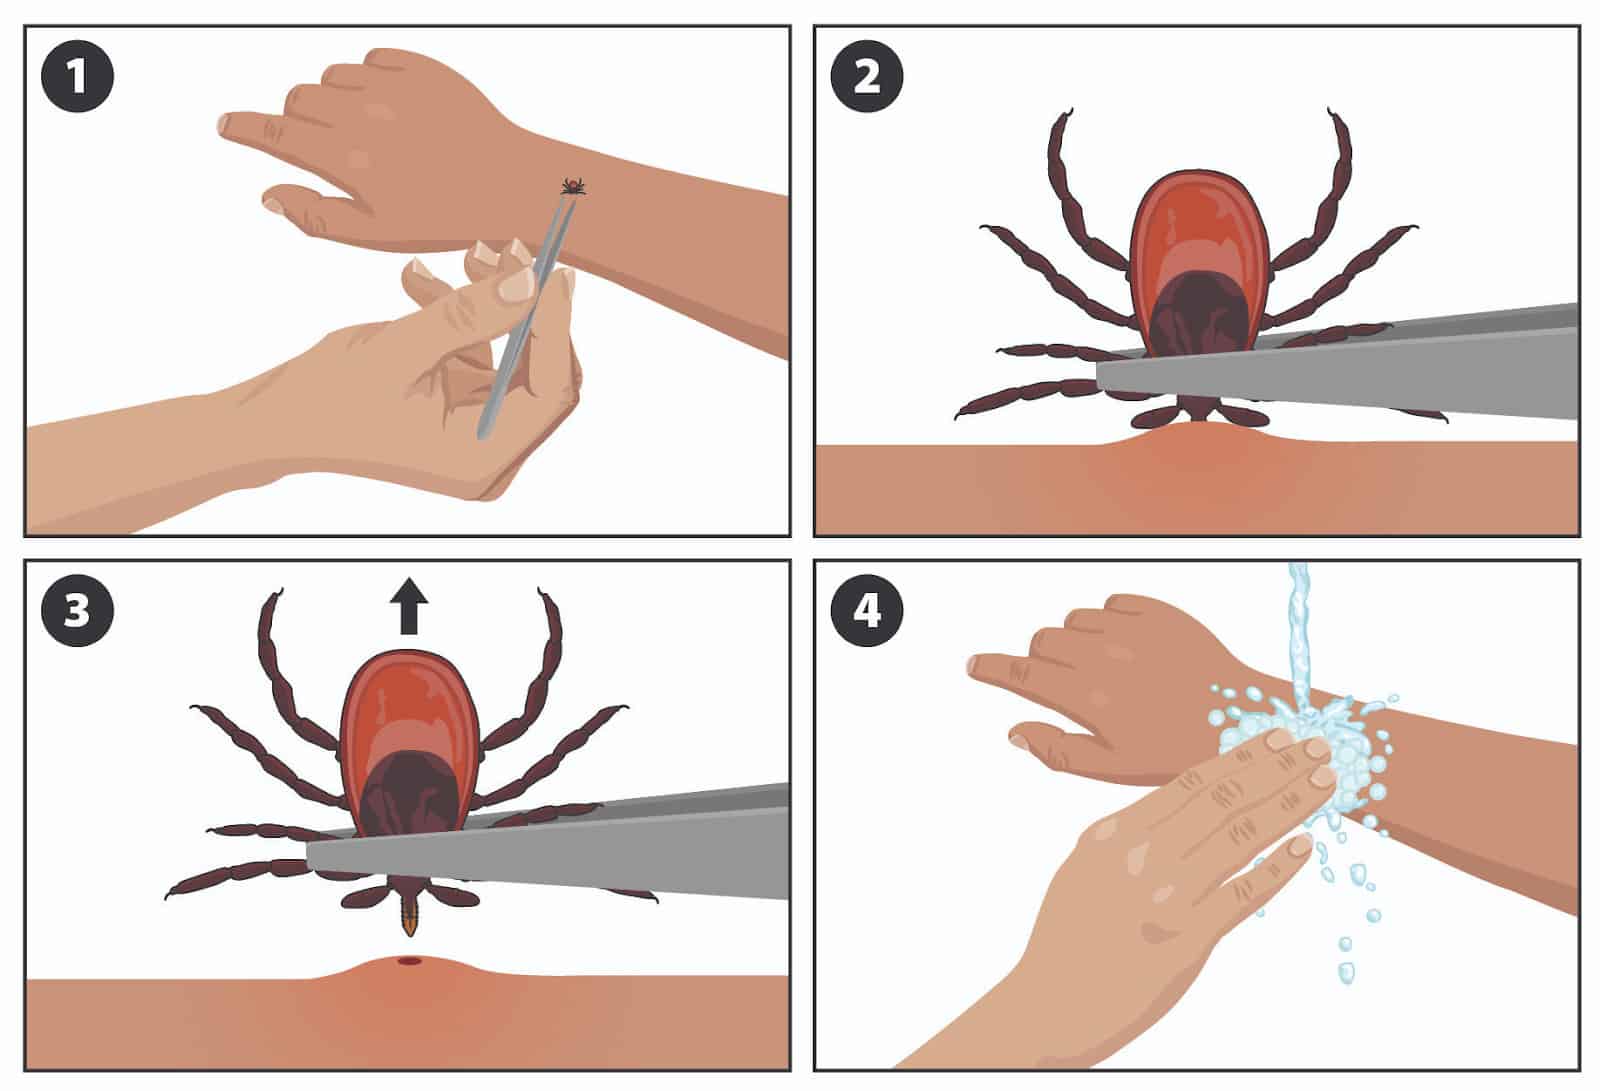 LCHD: How to prevent tick bites, identify disease symptoms, remove ticks